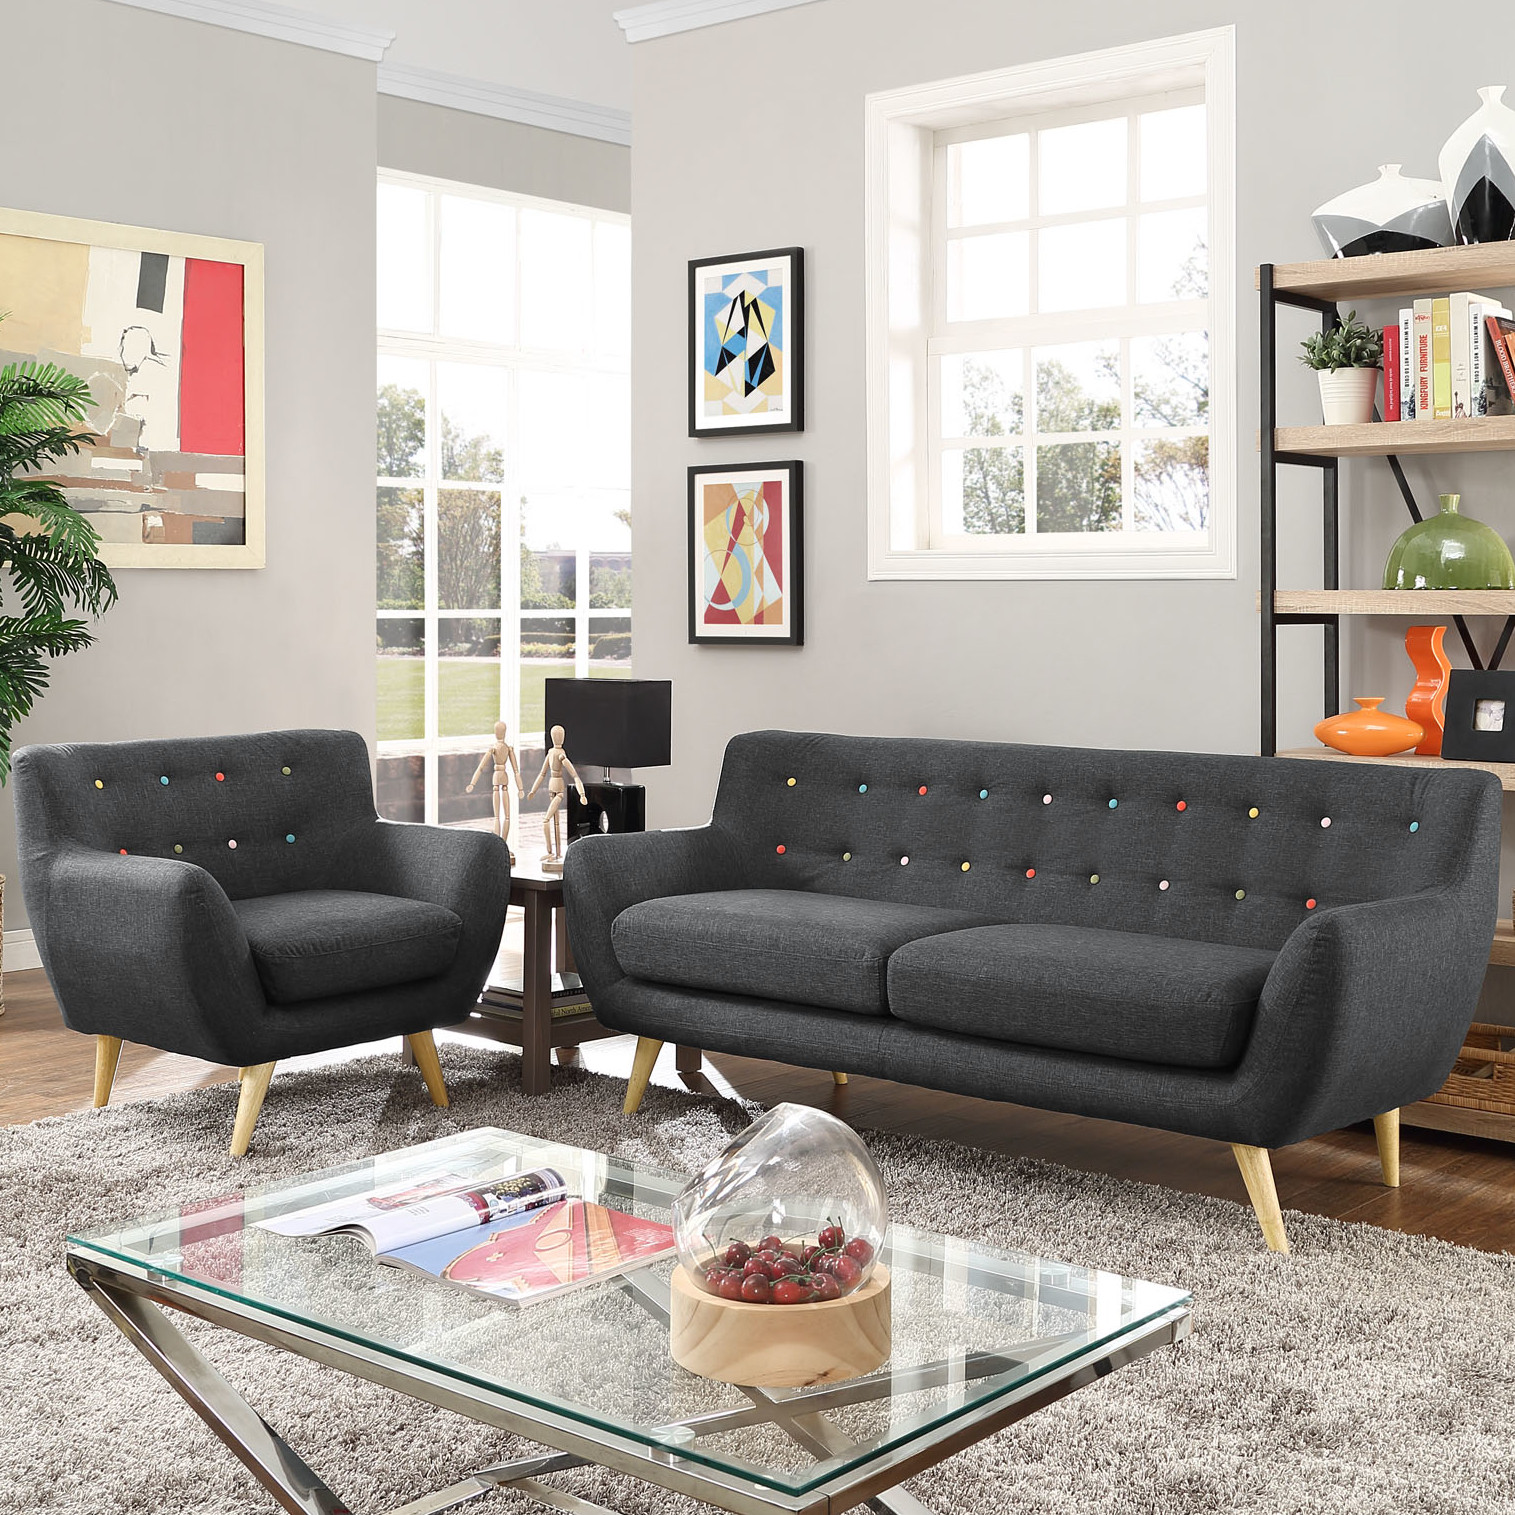 23 Captivating Modern Living Room Furniture Sets - Home Decoration and